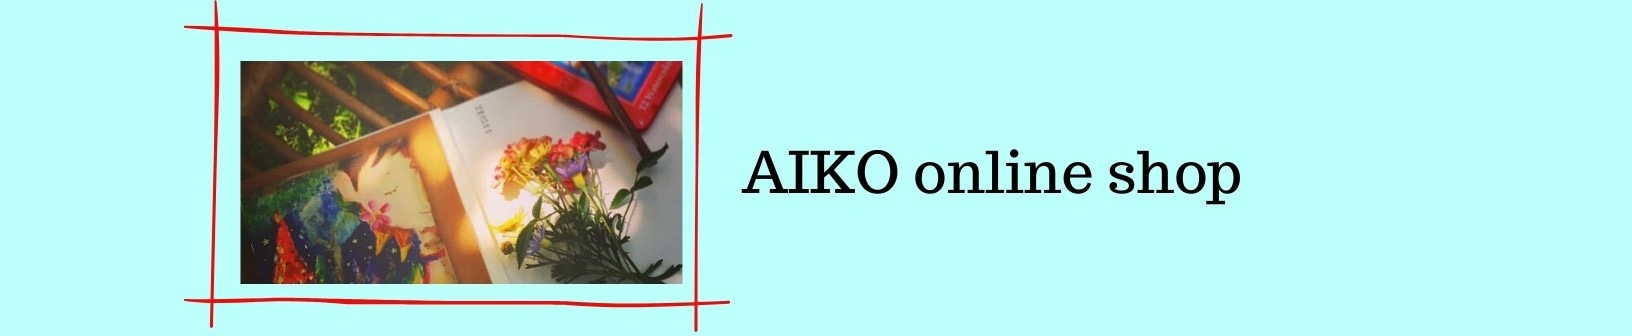 AIKO online shop